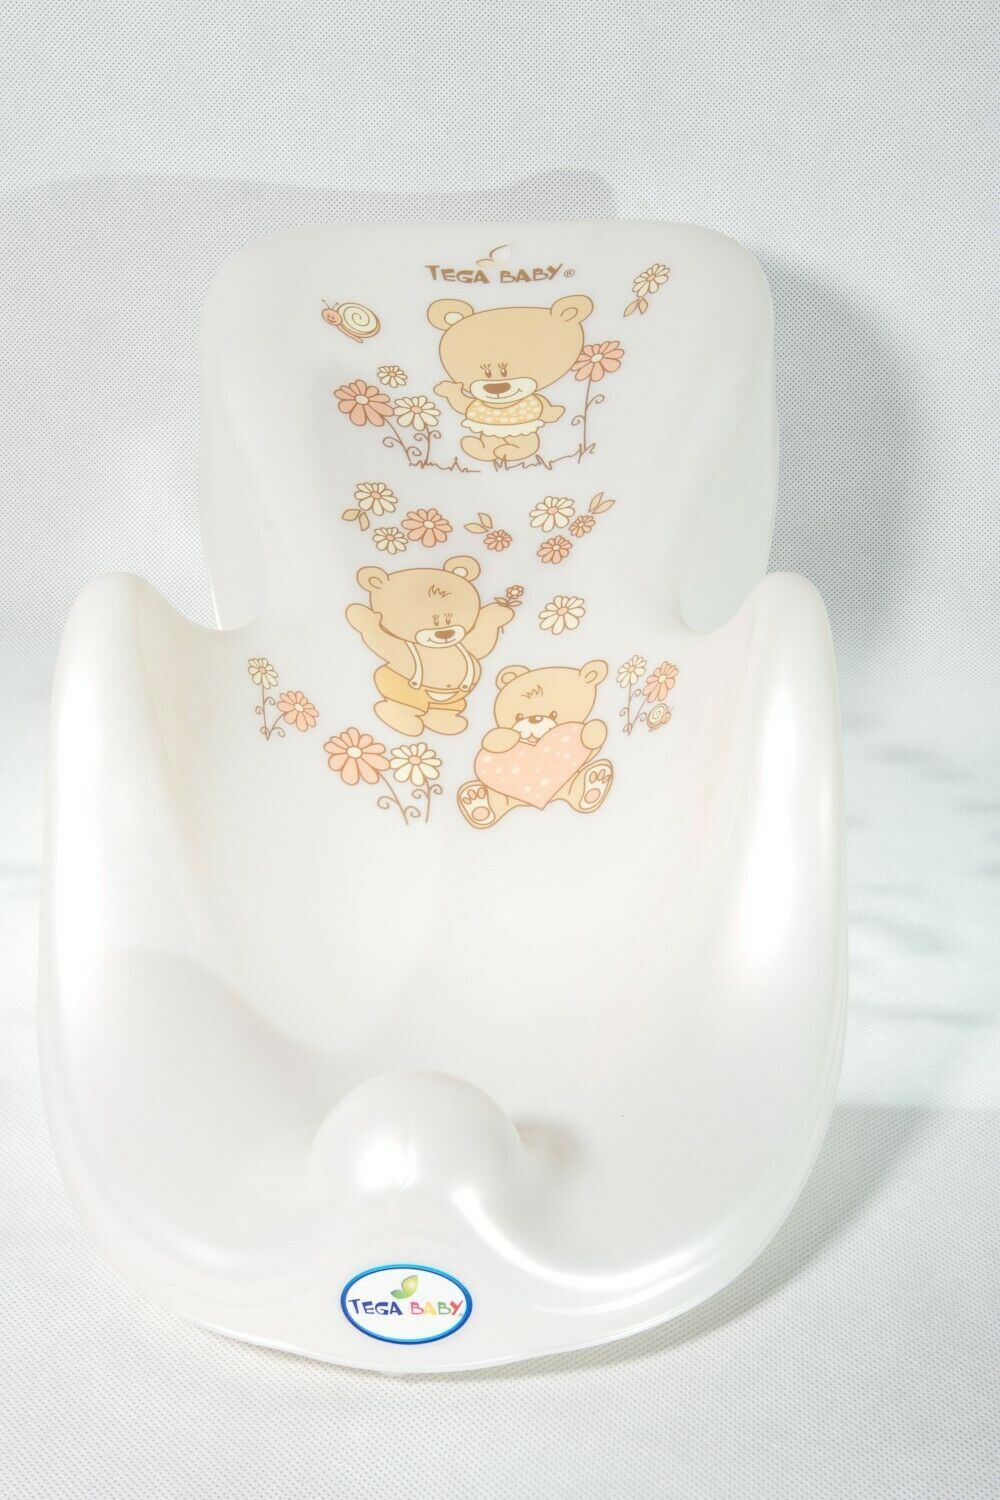 Baby Bath Support Seat Toddler Kids Anatomic Bath Chair Safe Non-Slip Tega Baby Teddy White